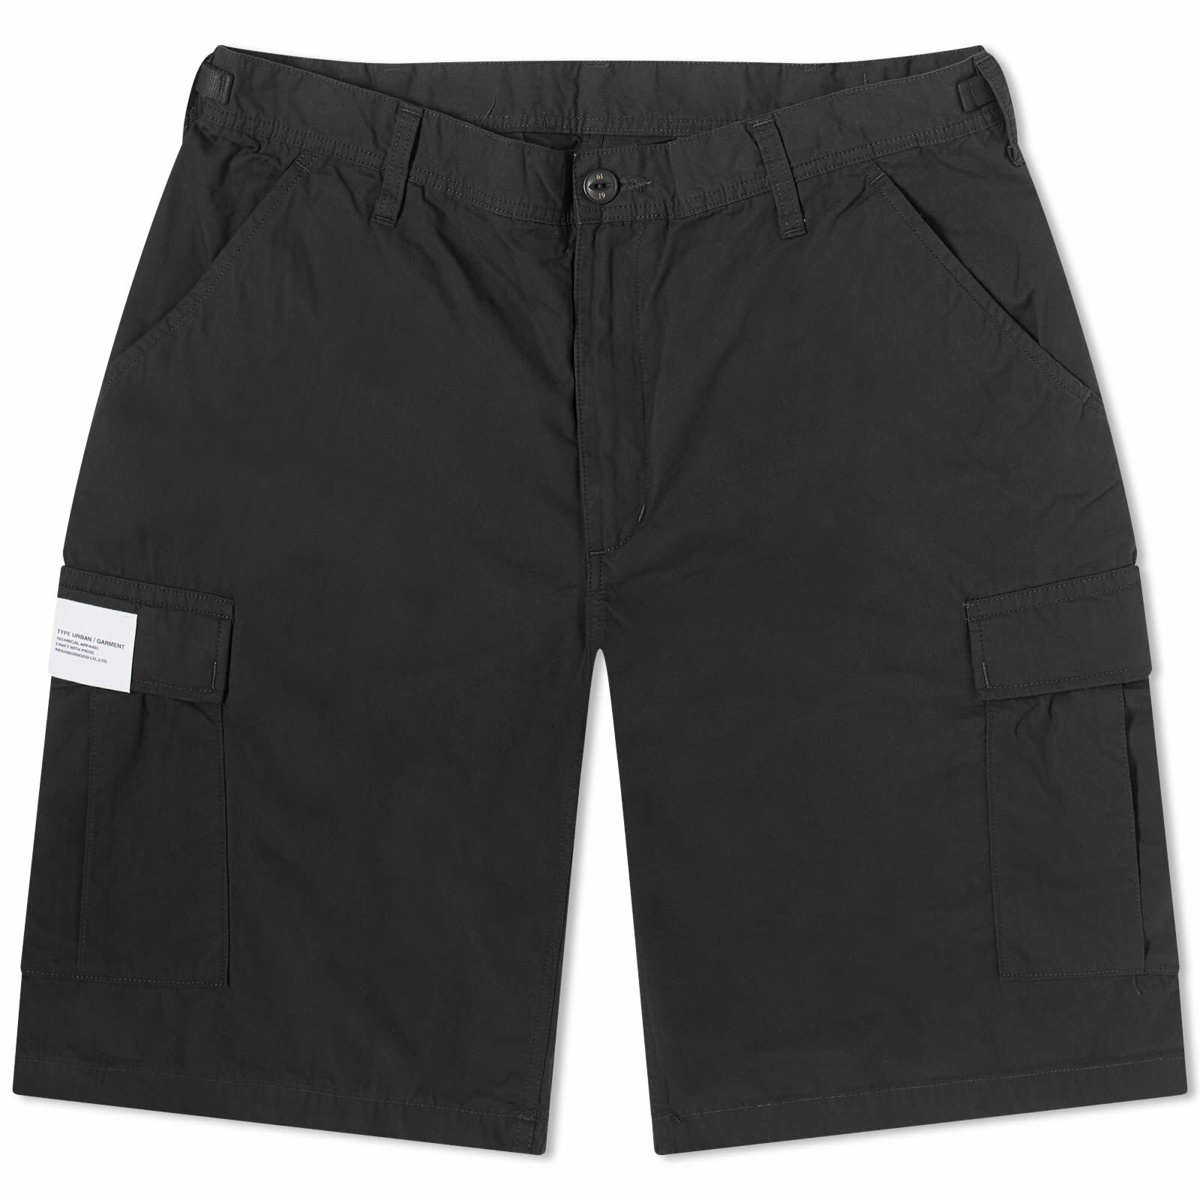 Converse Mesh Jacquard Shorts In Black 10003453 A02, $28, Asos